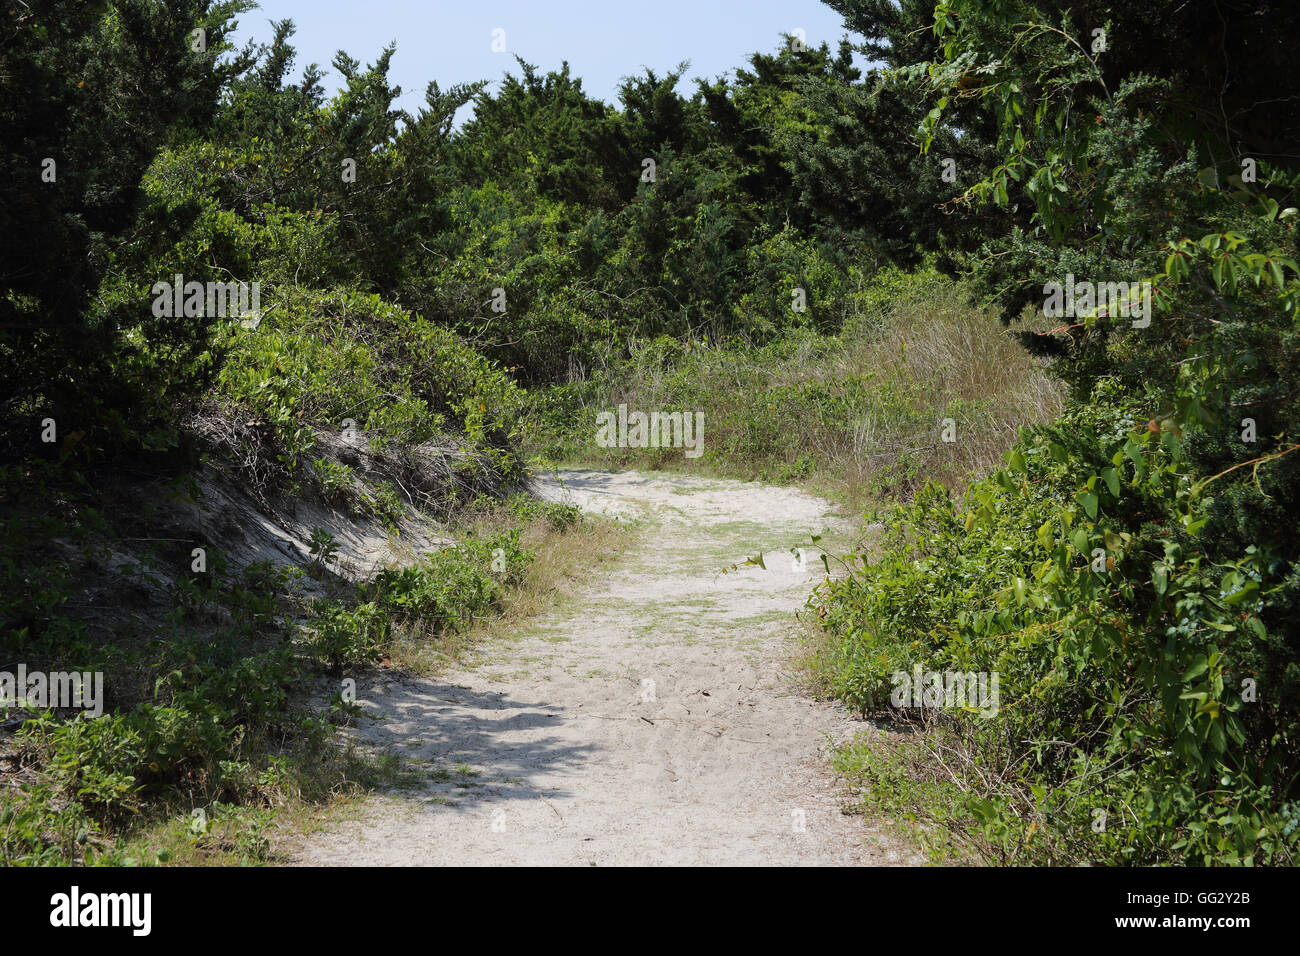 Sandy pathway trough dunes, trees and vegetation Stock Photo